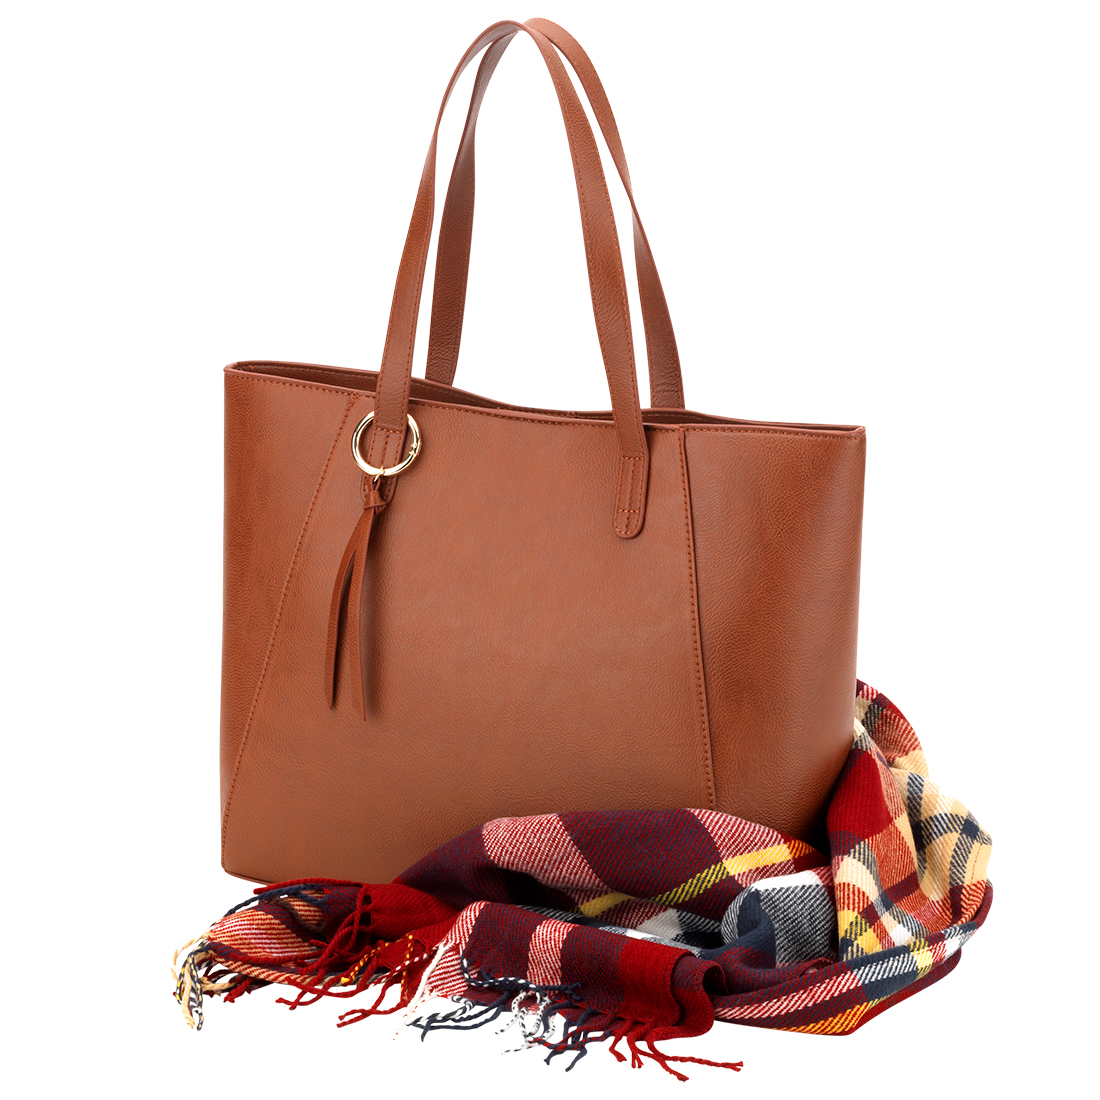 Camel Carly purse large vegan leather bag tote